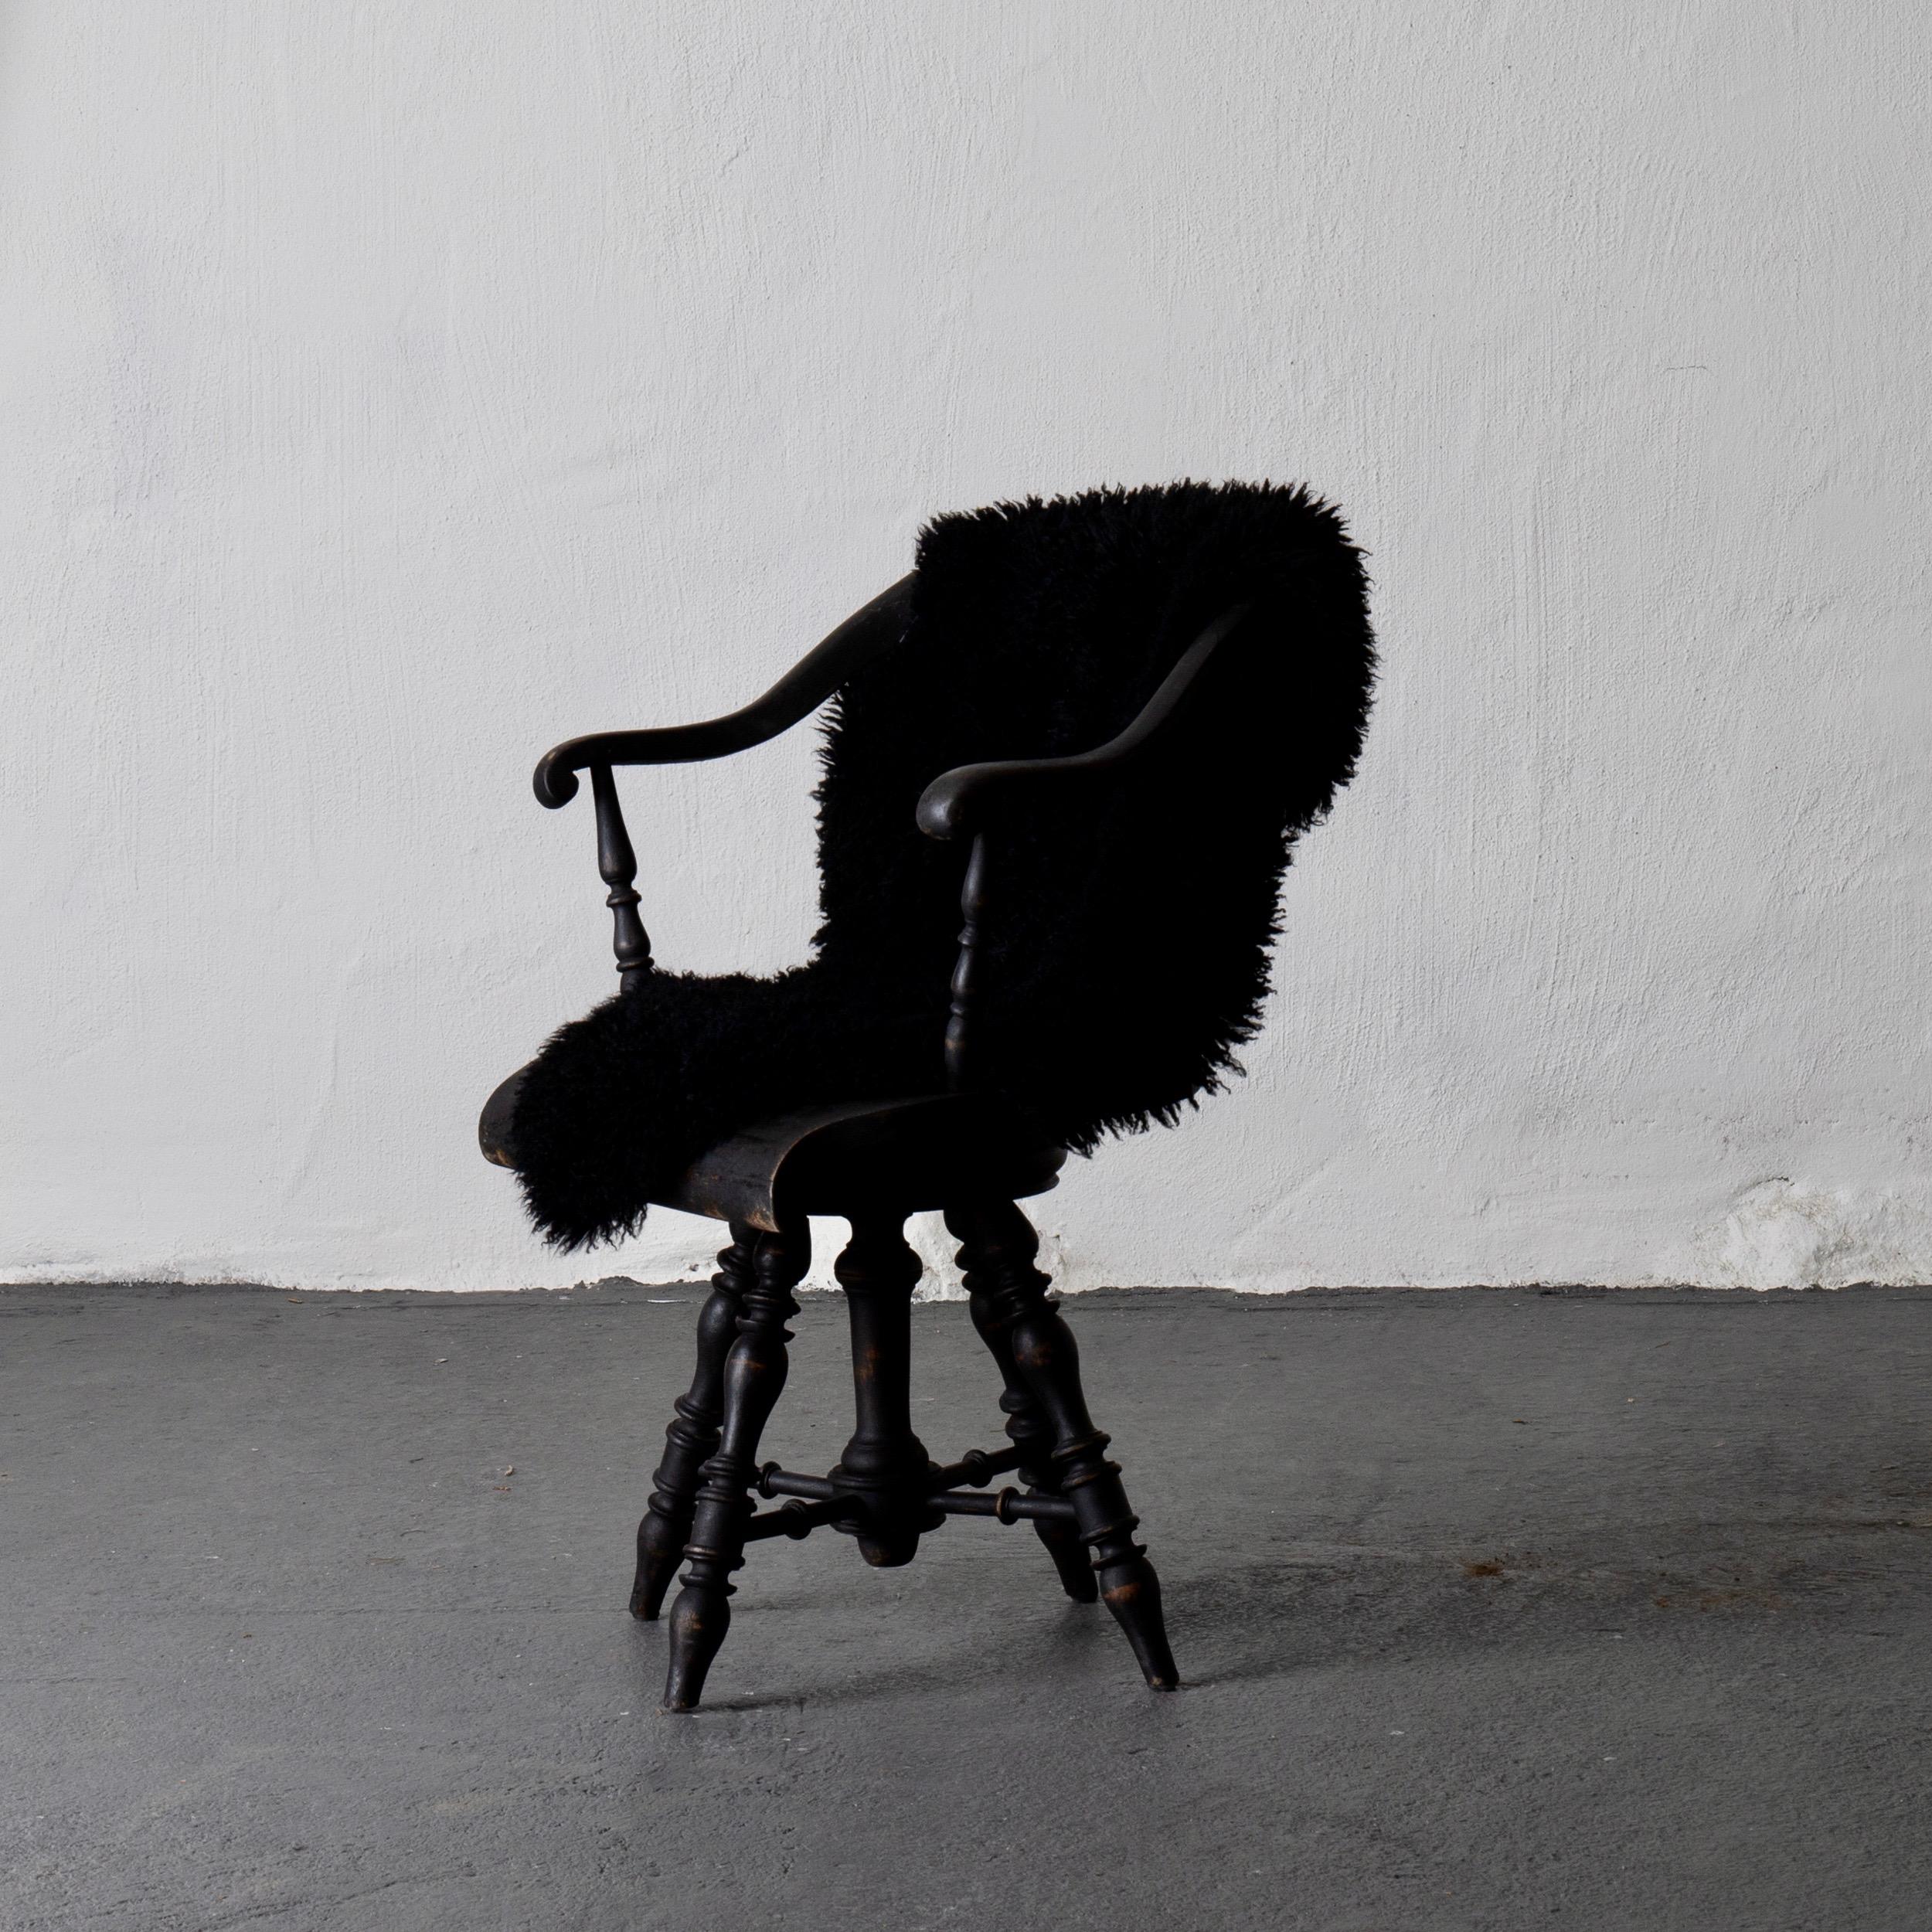 Folk Art Armchair Captain's Chair Black Swedish 19th Century Sweden For Sale